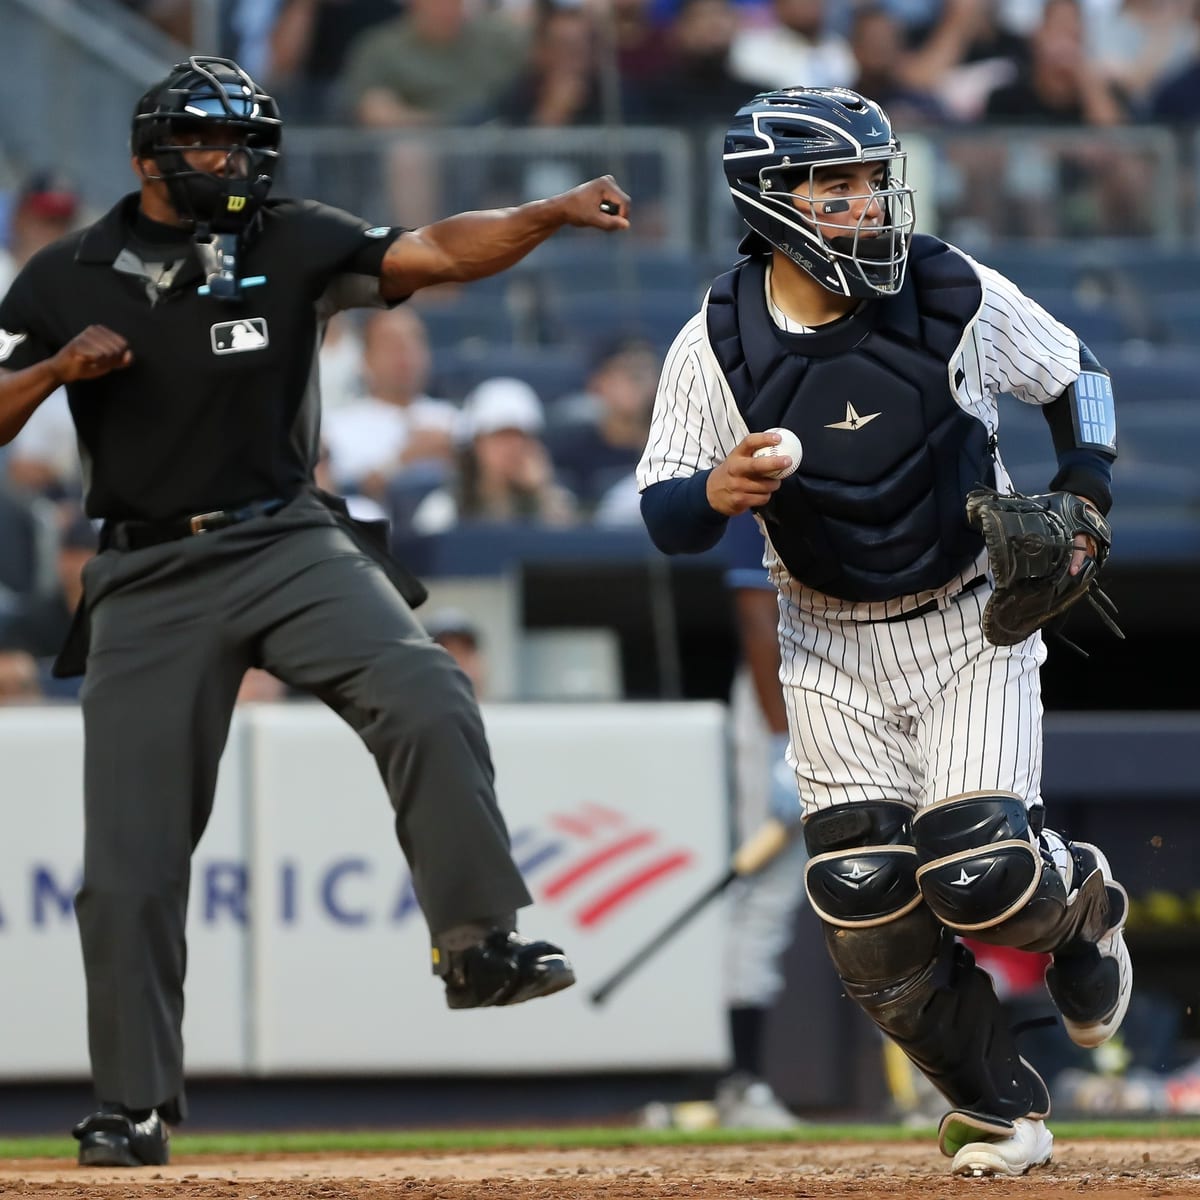 Yankees star Jose Trevino's emotional reaction to making first MLB